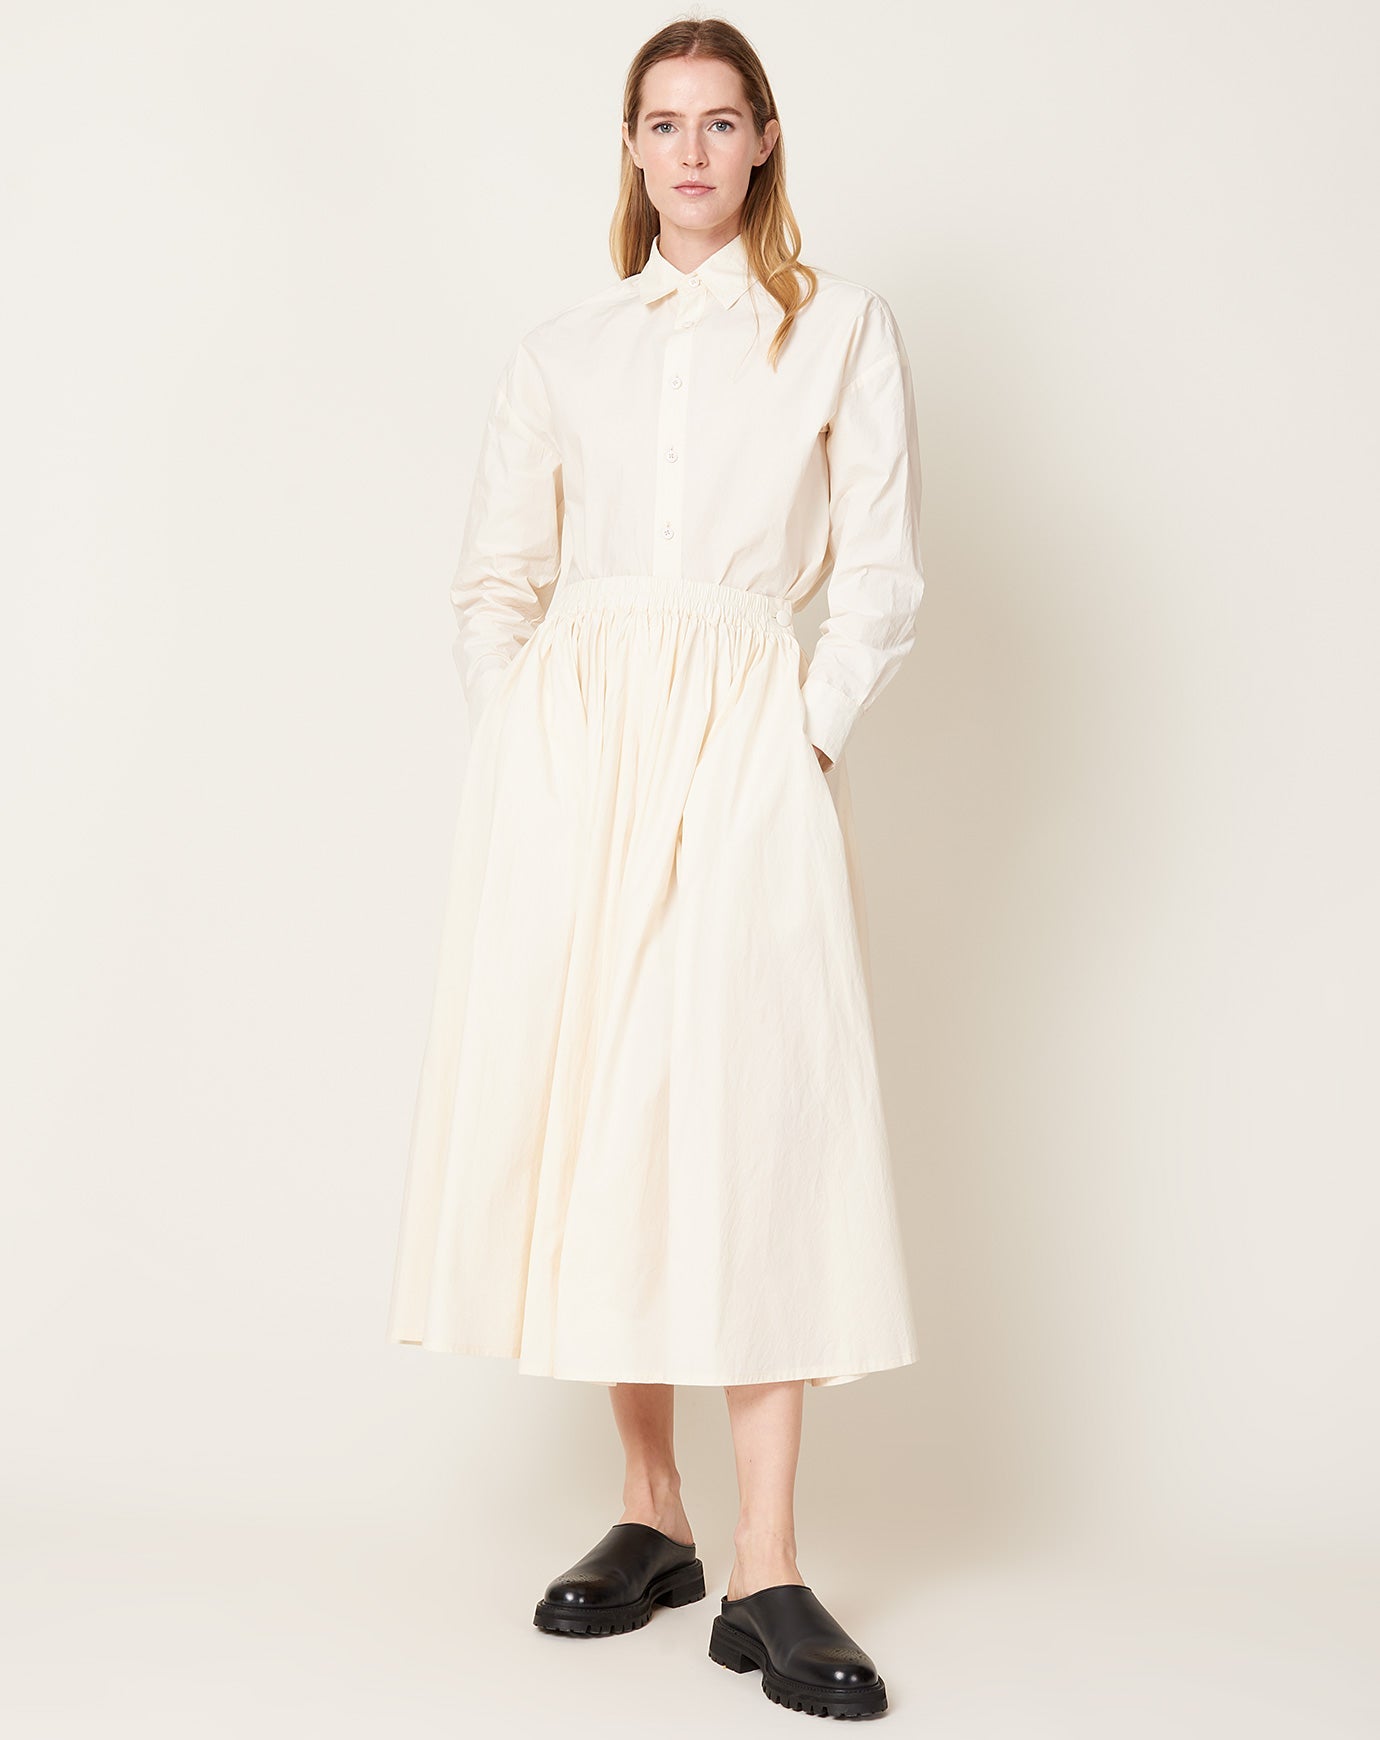 7115 by Szeki Papery Elastic Prairie Skirt in Off White